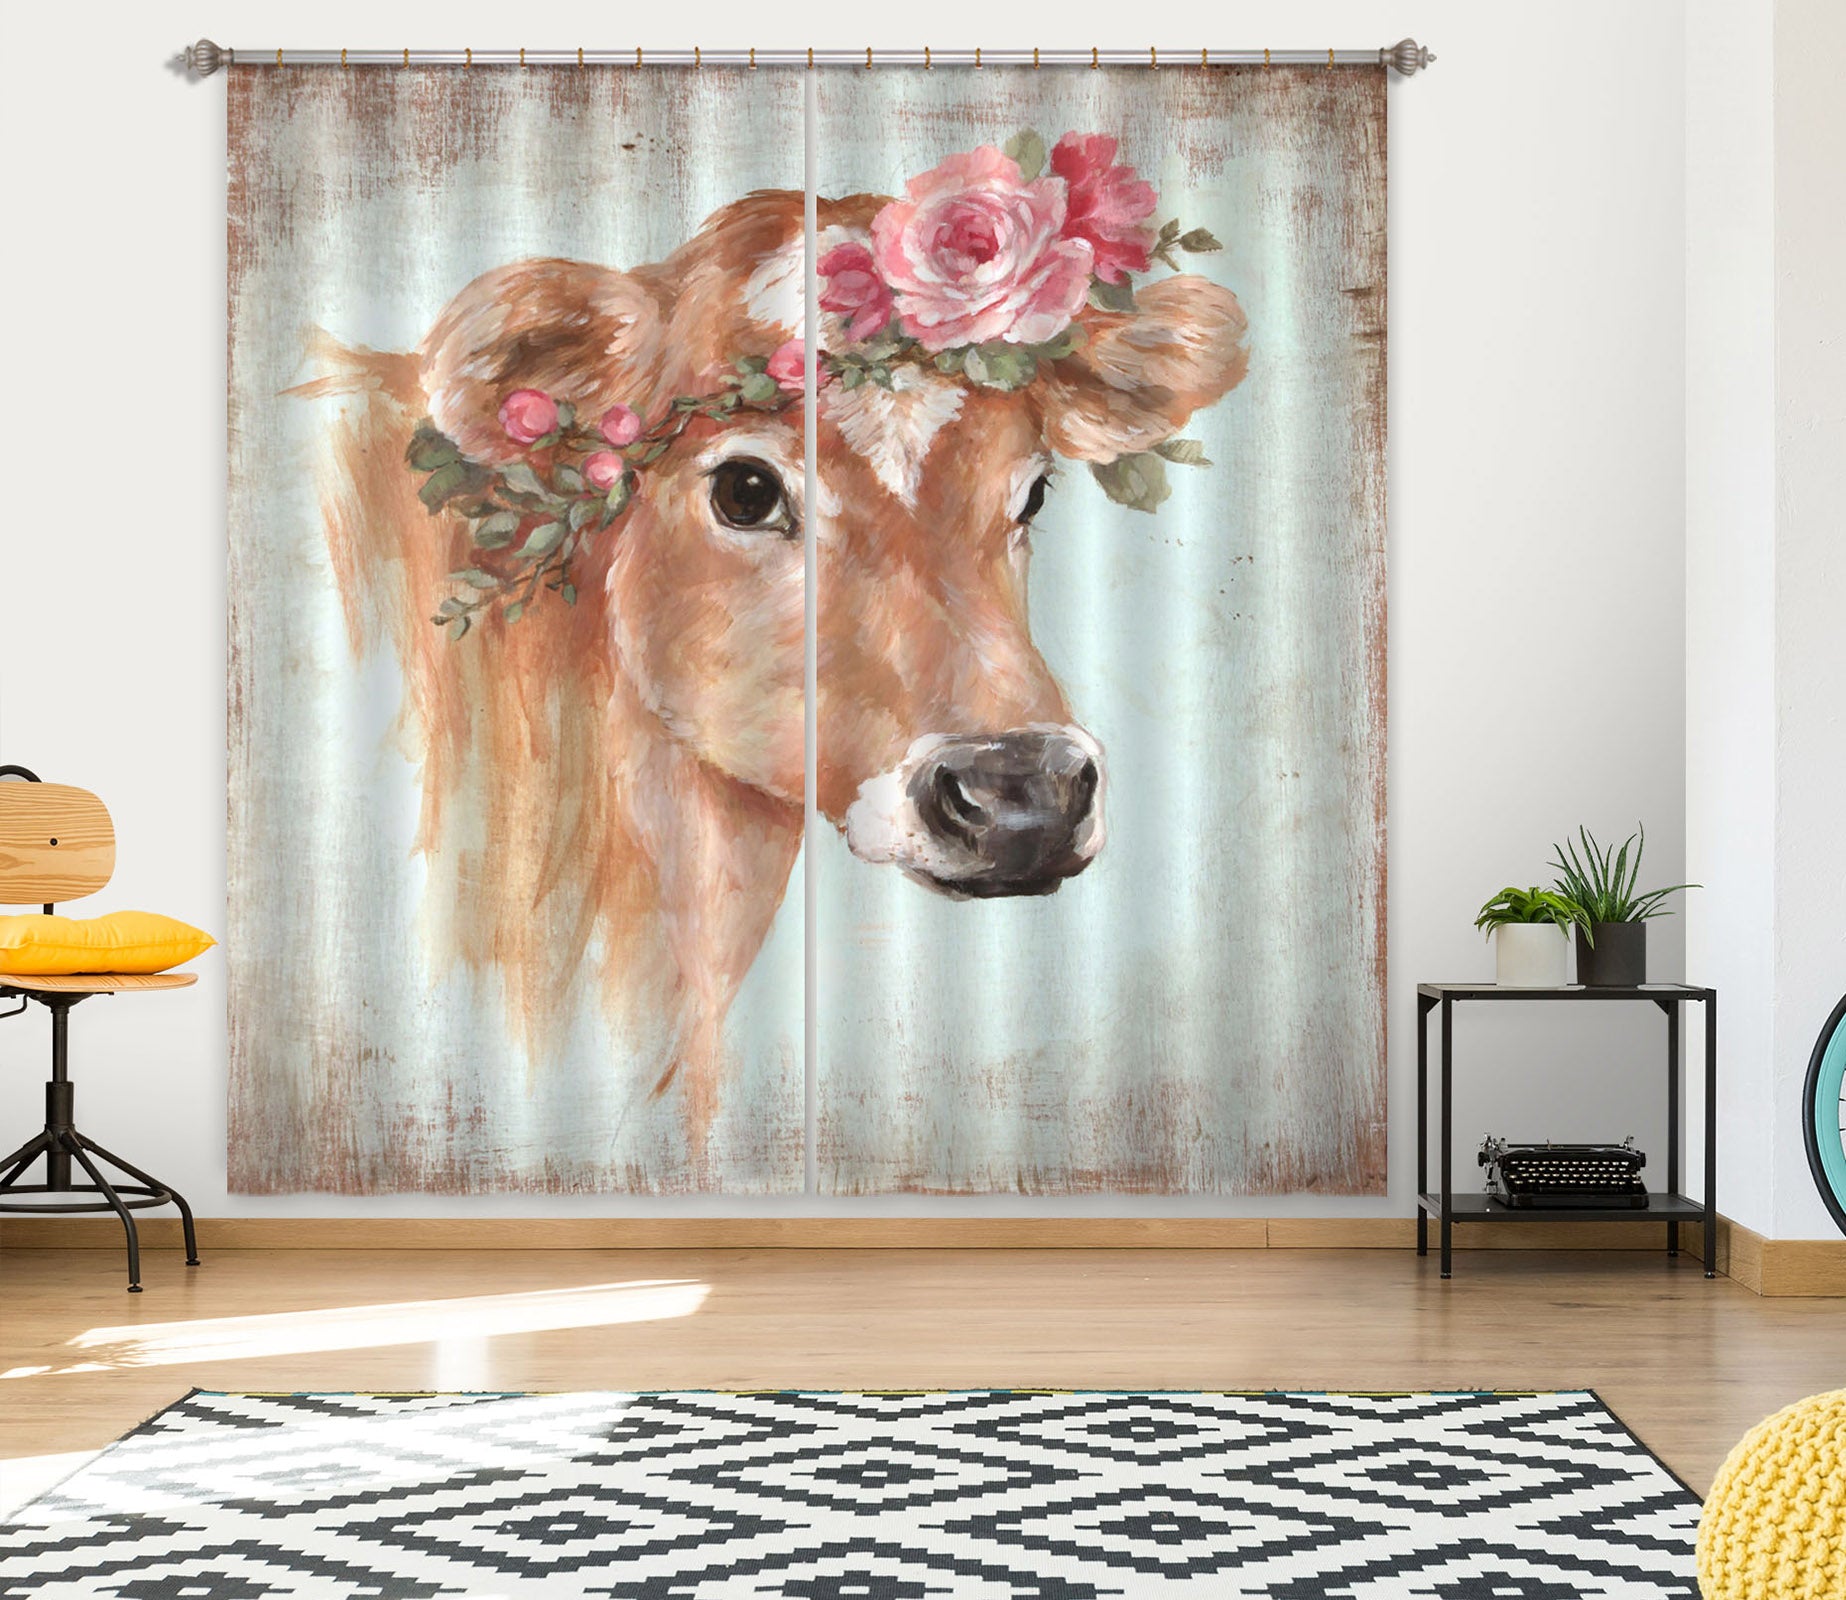 3D Rose Cow 058 Debi Coules Curtain Curtains Drapes